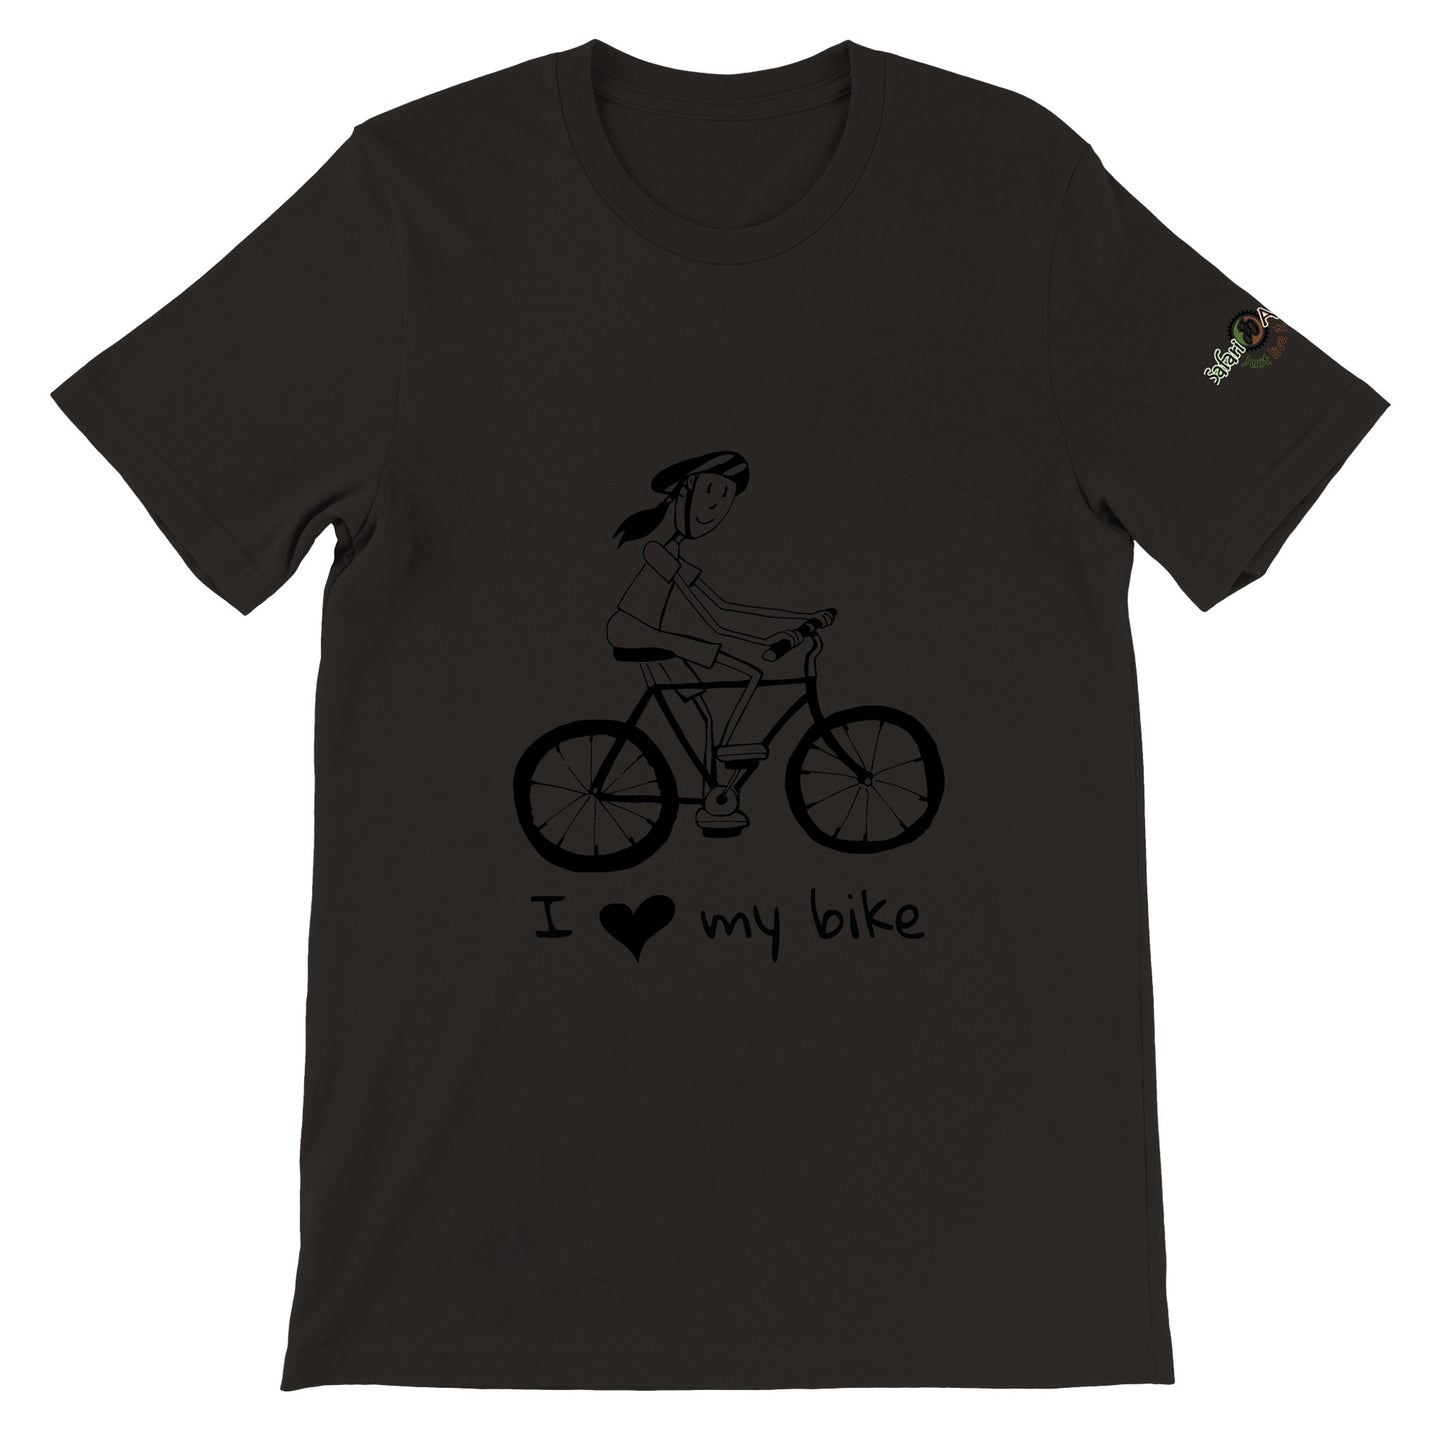 I love my bike womans cartoon t-shirt